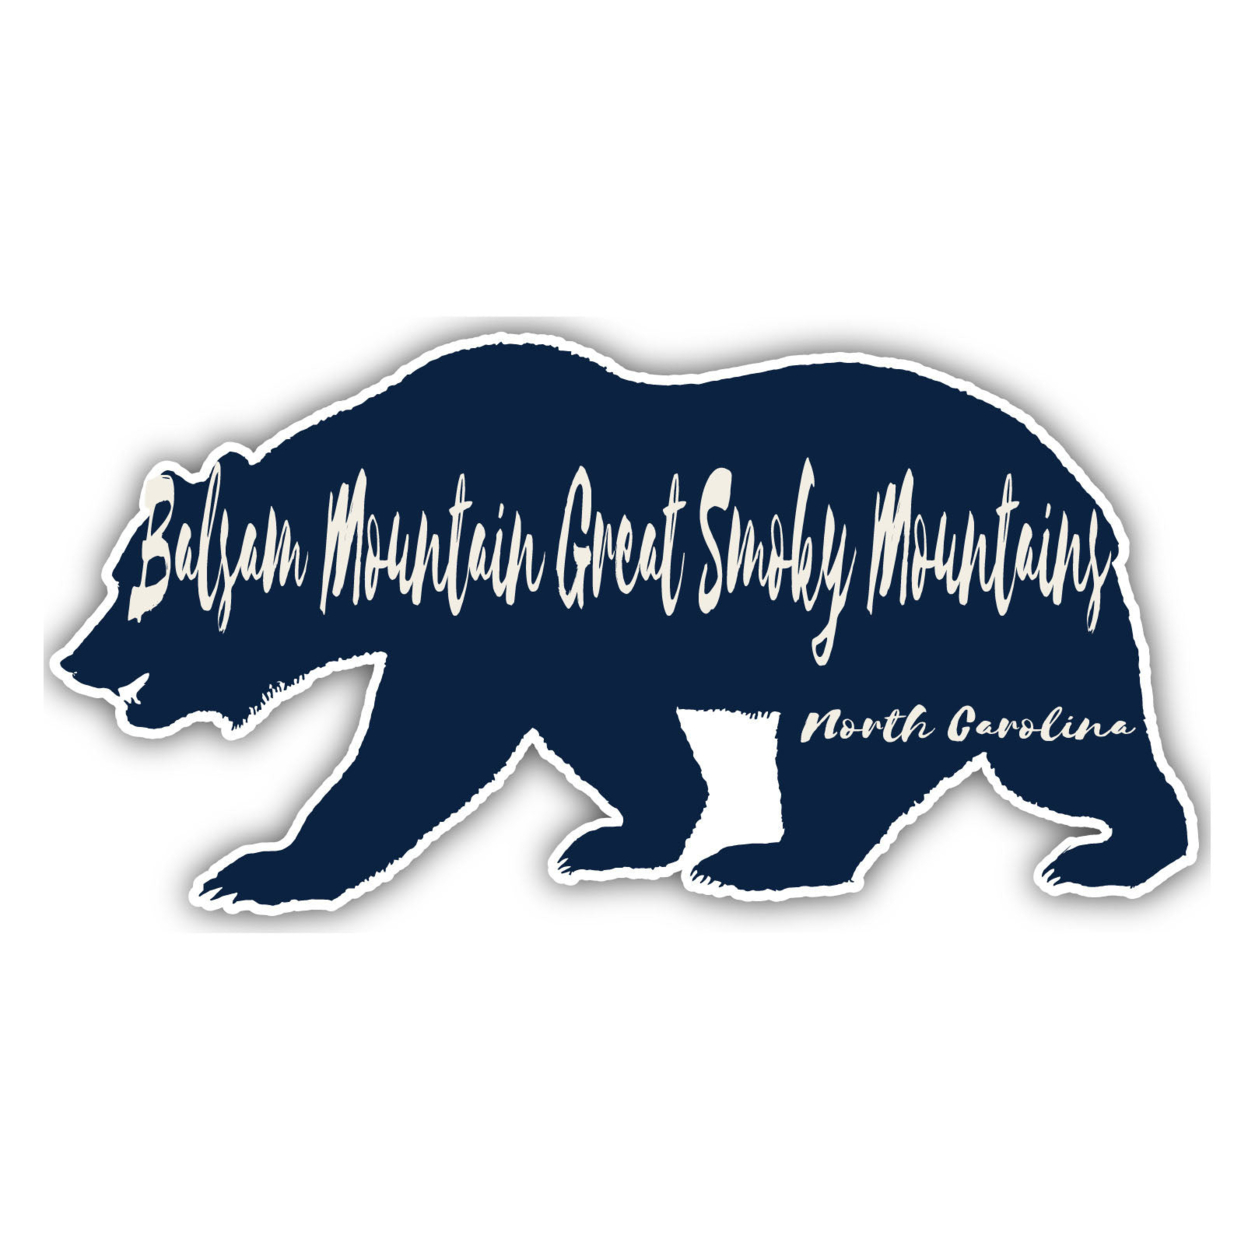 Balsam Mountain Great Smoky Mountains North Carolina Souvenir Decorative Stickers (Choose Theme And Size) - Single Unit, 6-Inch, Bear